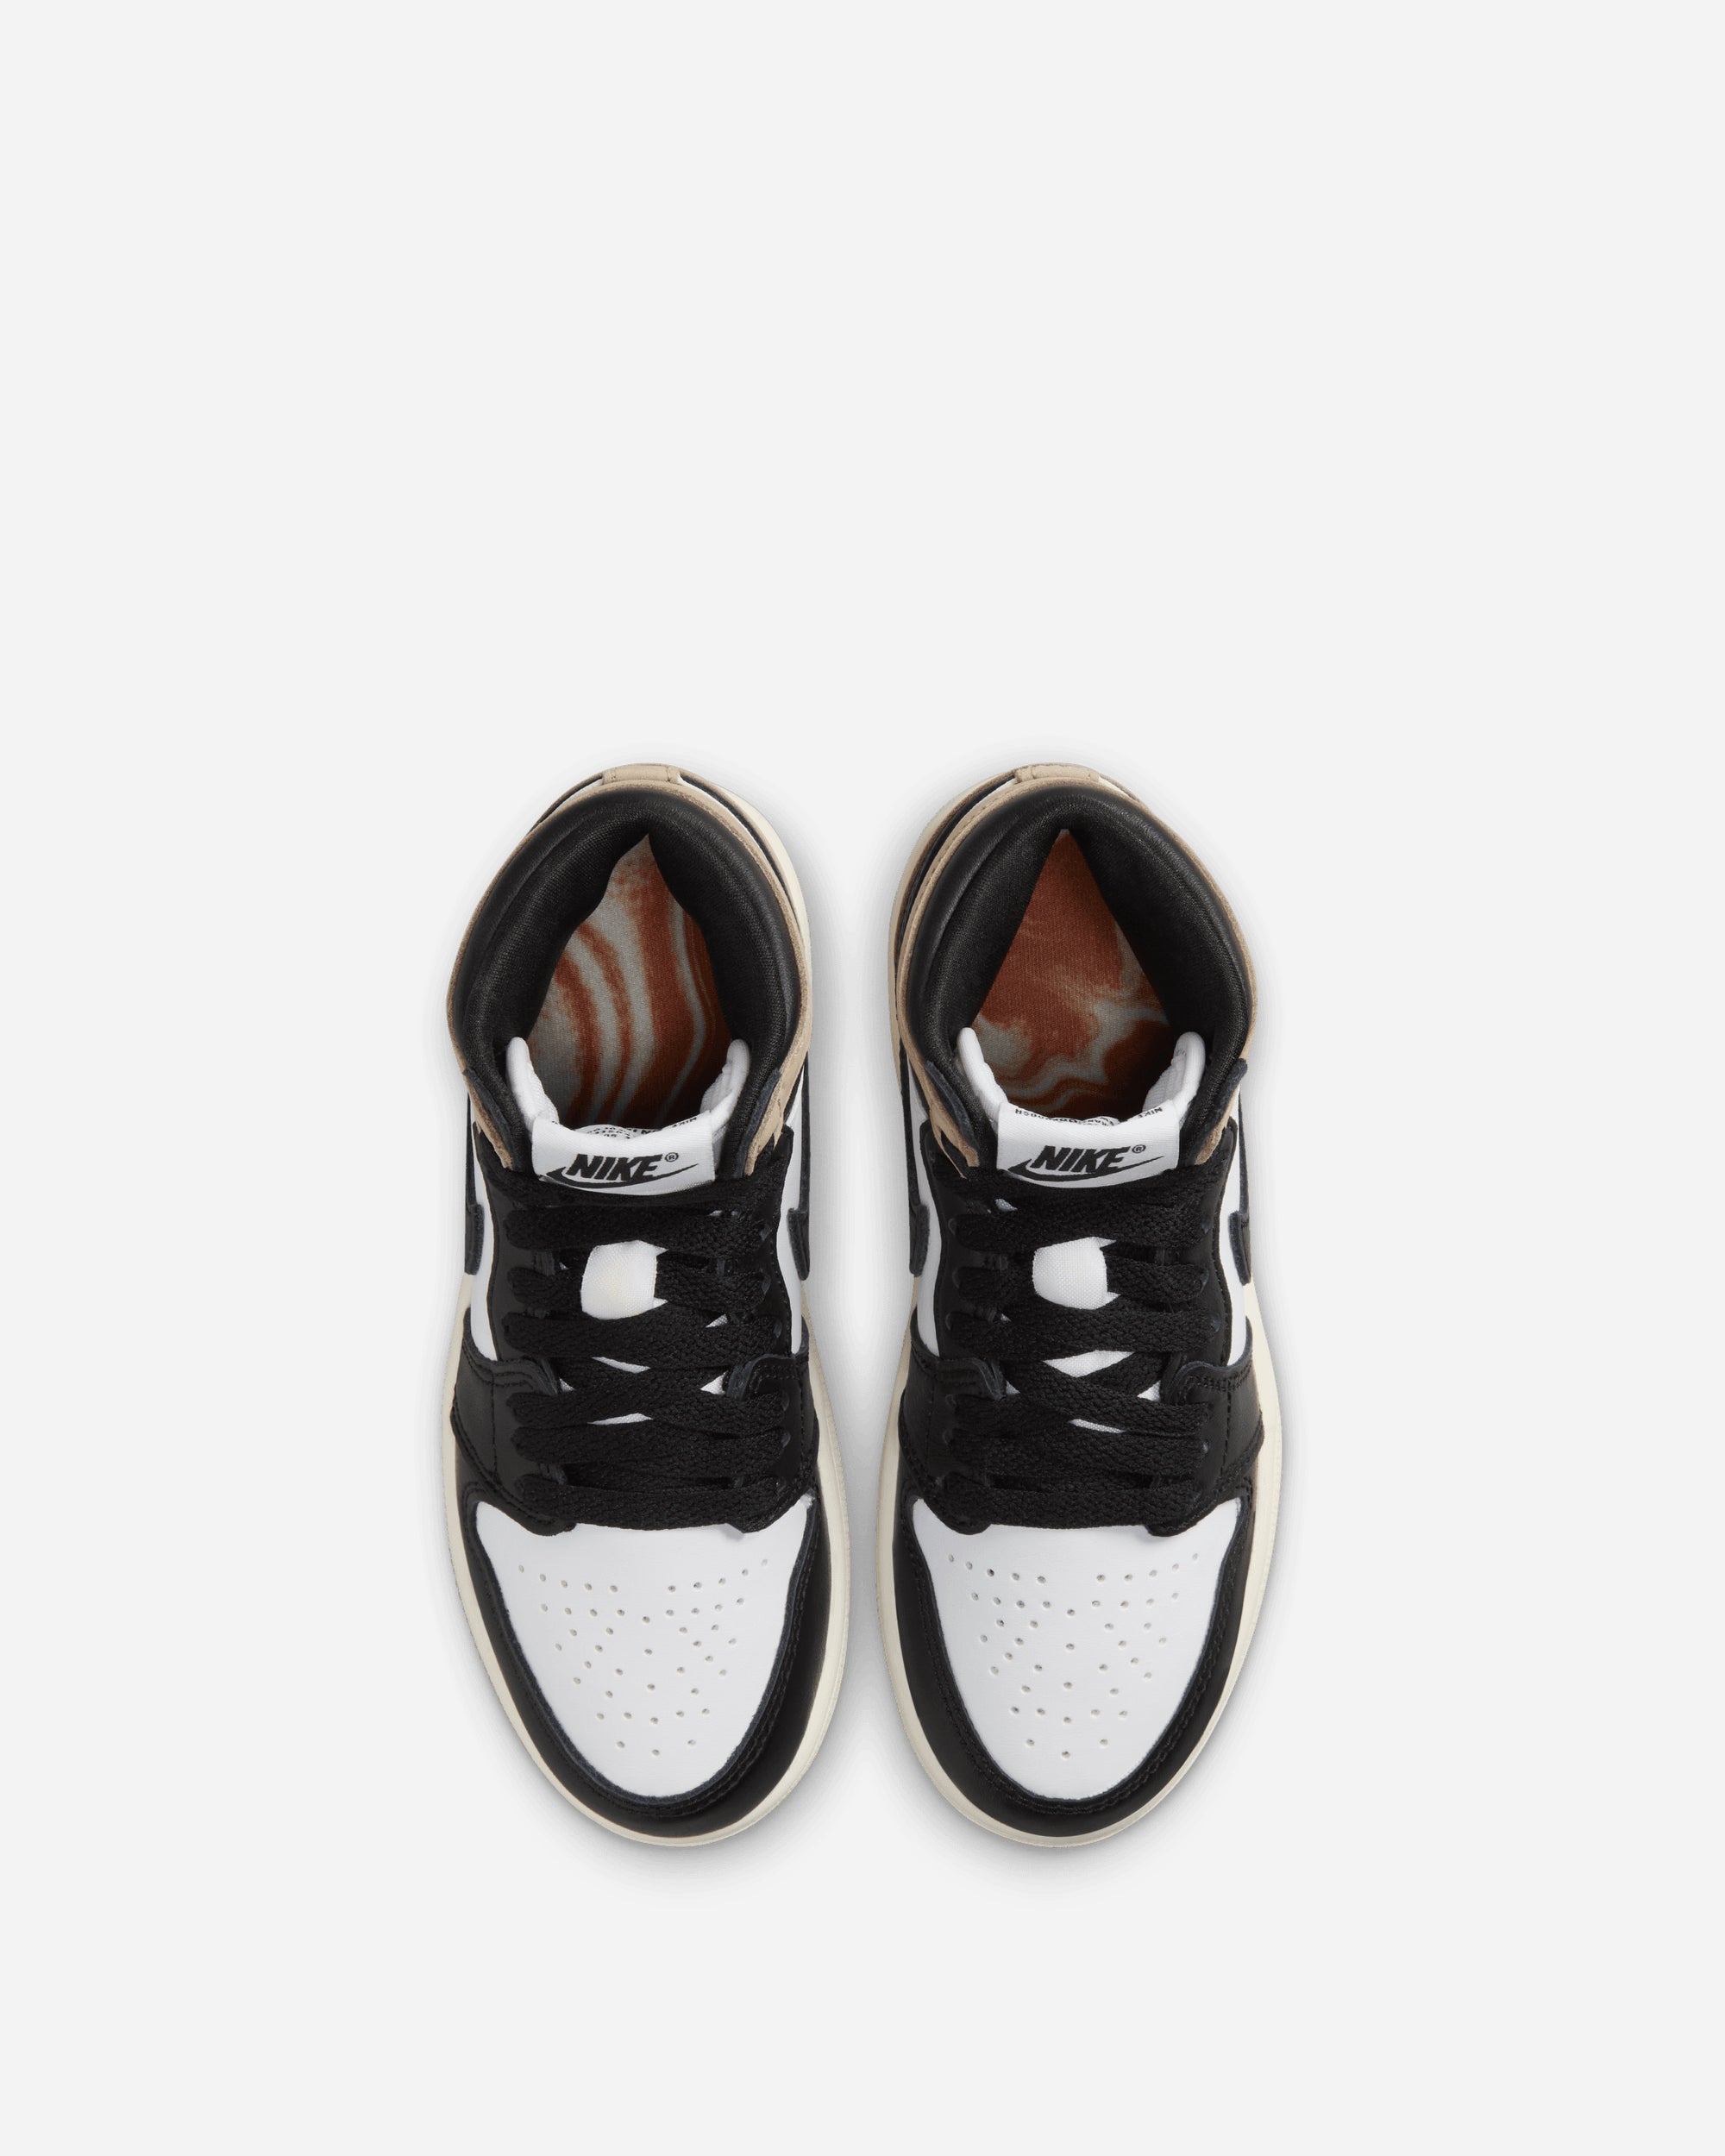 Jordan Brand Jordan 1 Retro High OG 'Latte' (Preschool) BLACK/BROWN FD2597-021